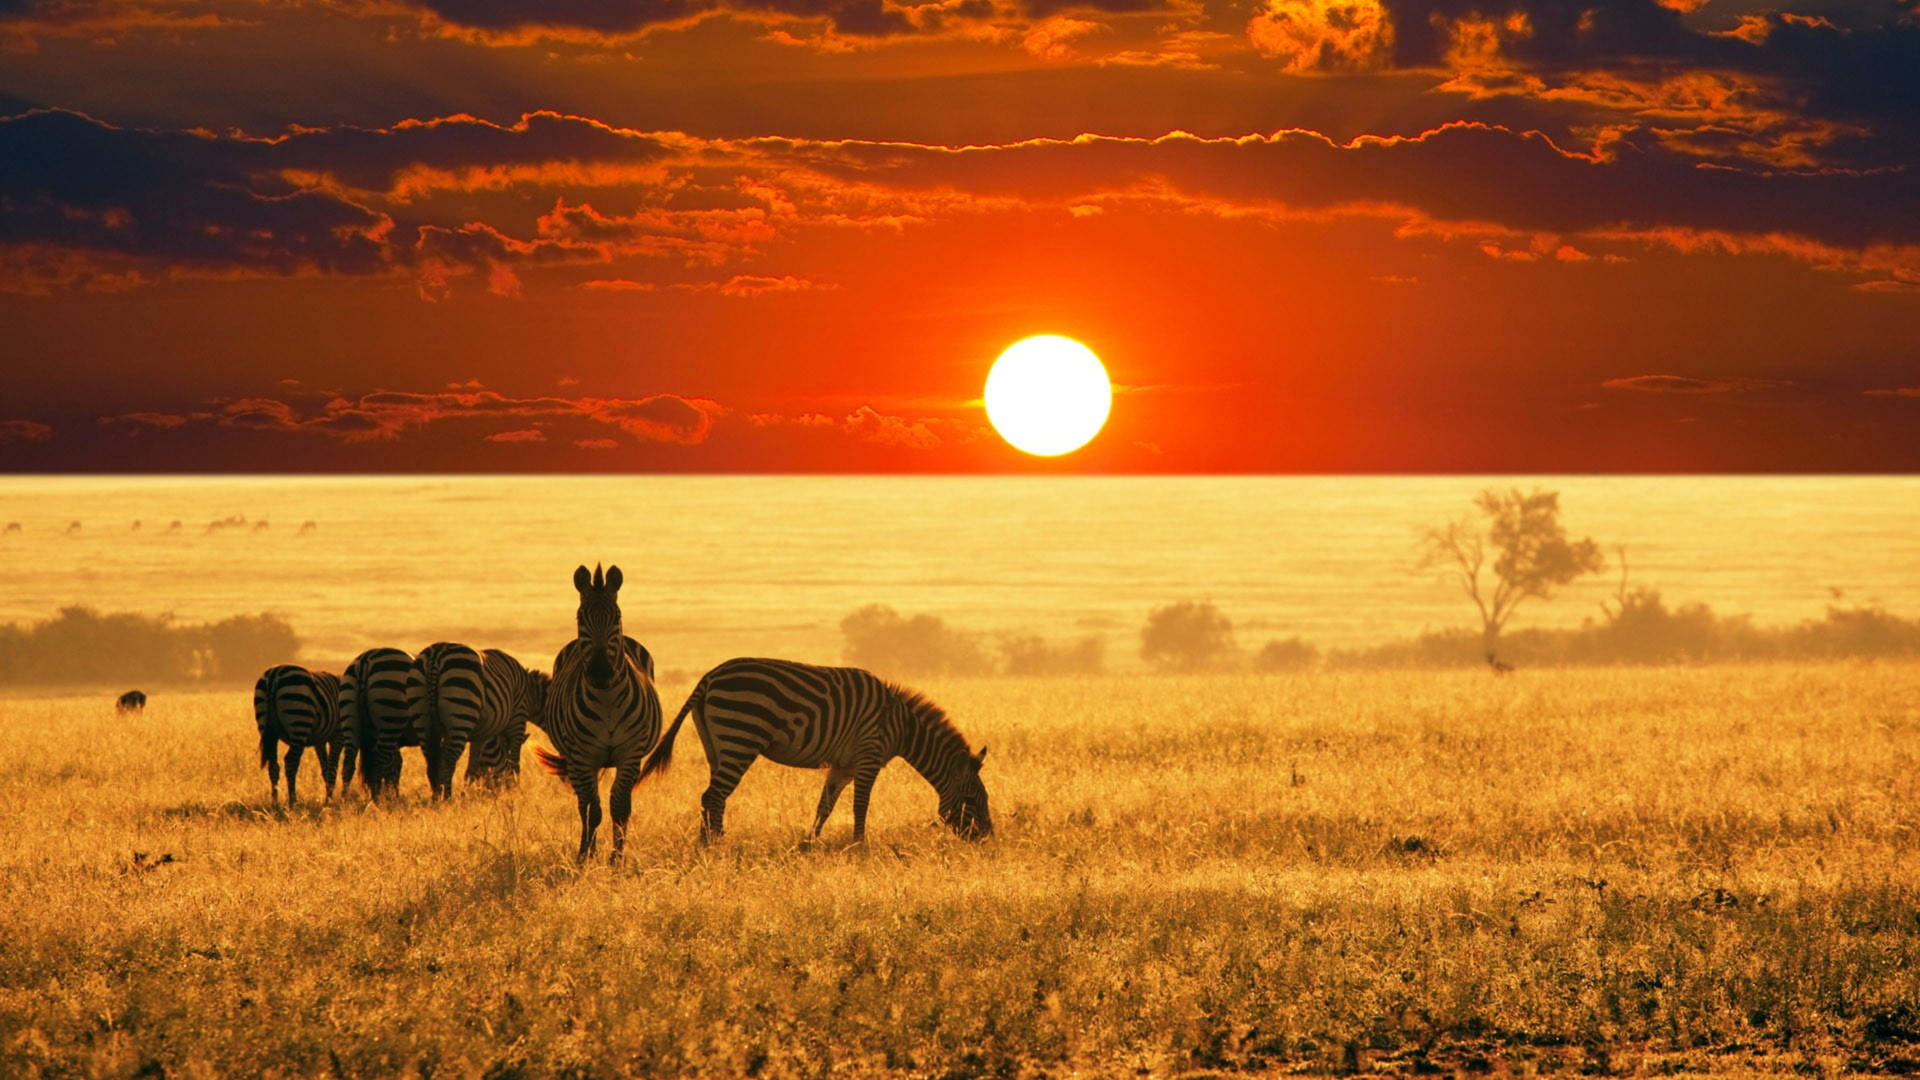 Zebra In Grassland At Sunset Wallpaper